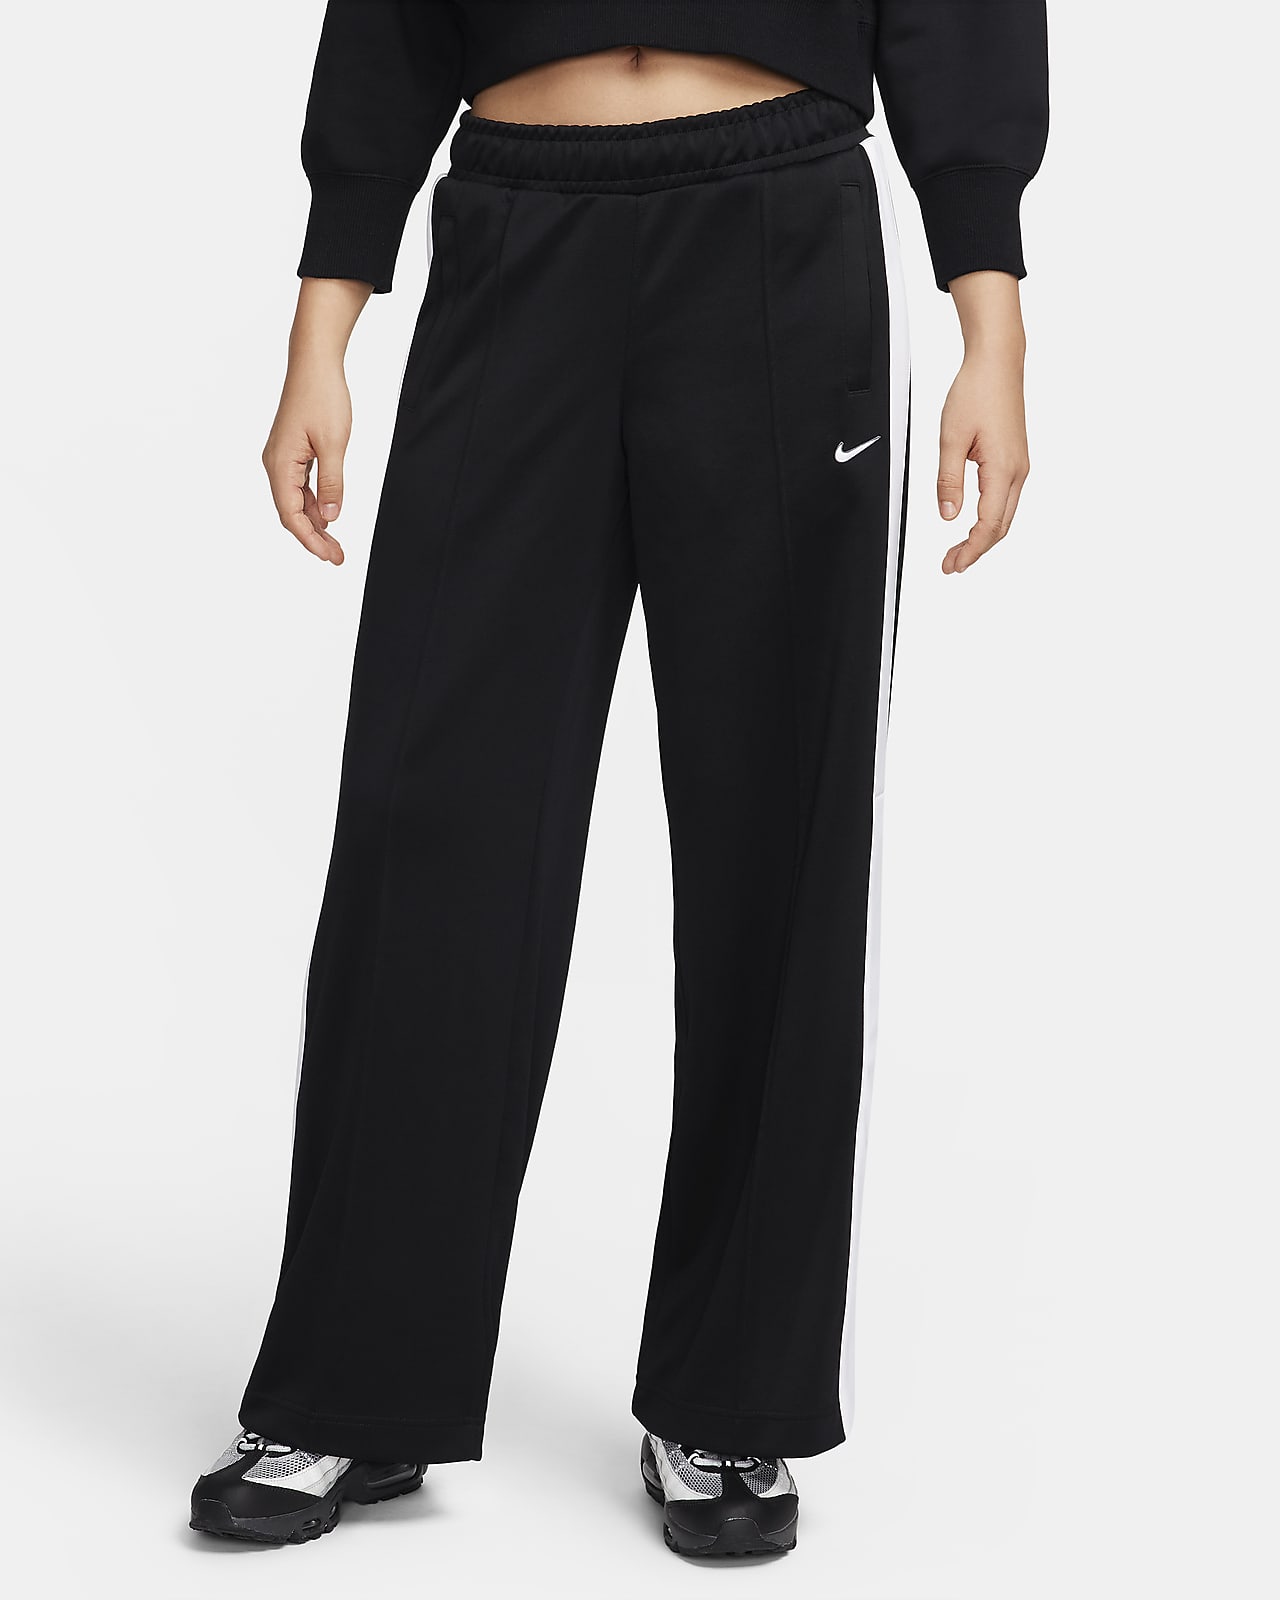 Pantaloni Nike Sportswear - Donna